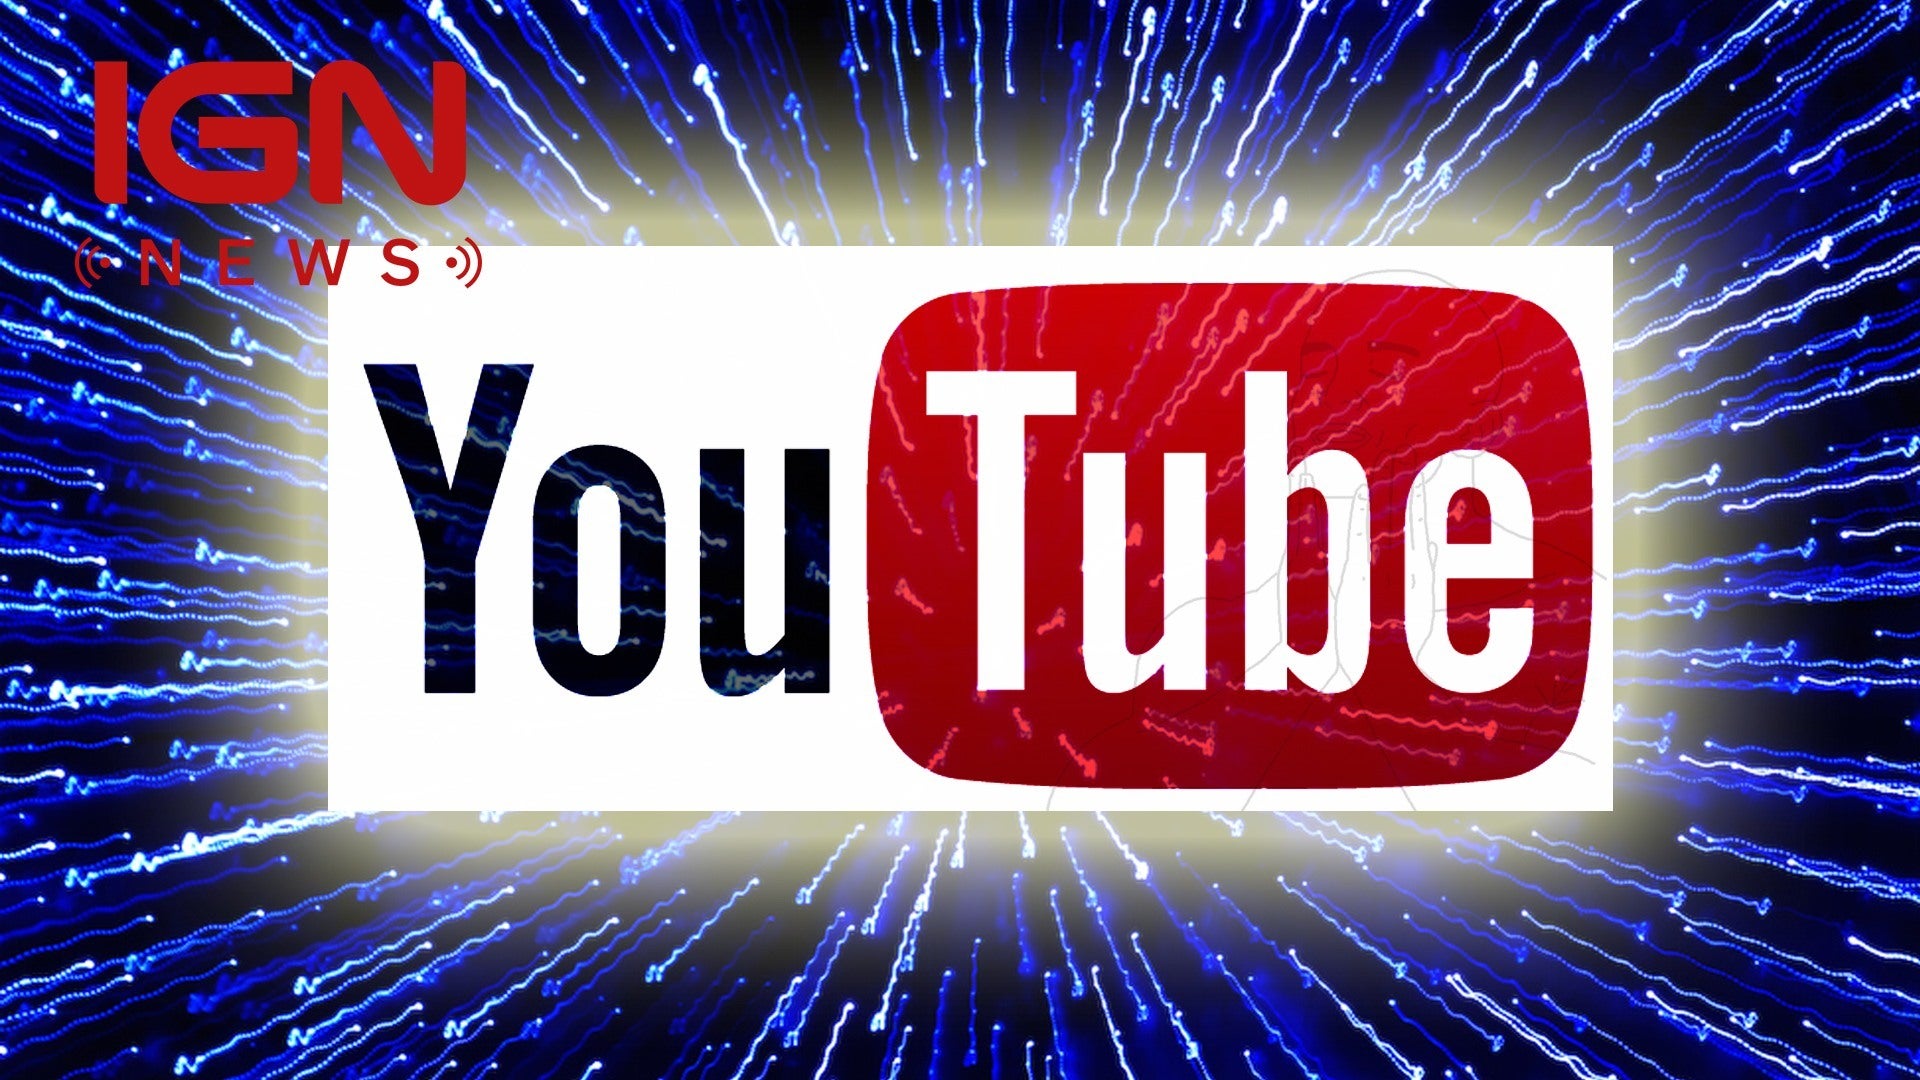 YouTube Announces New Live TV Service